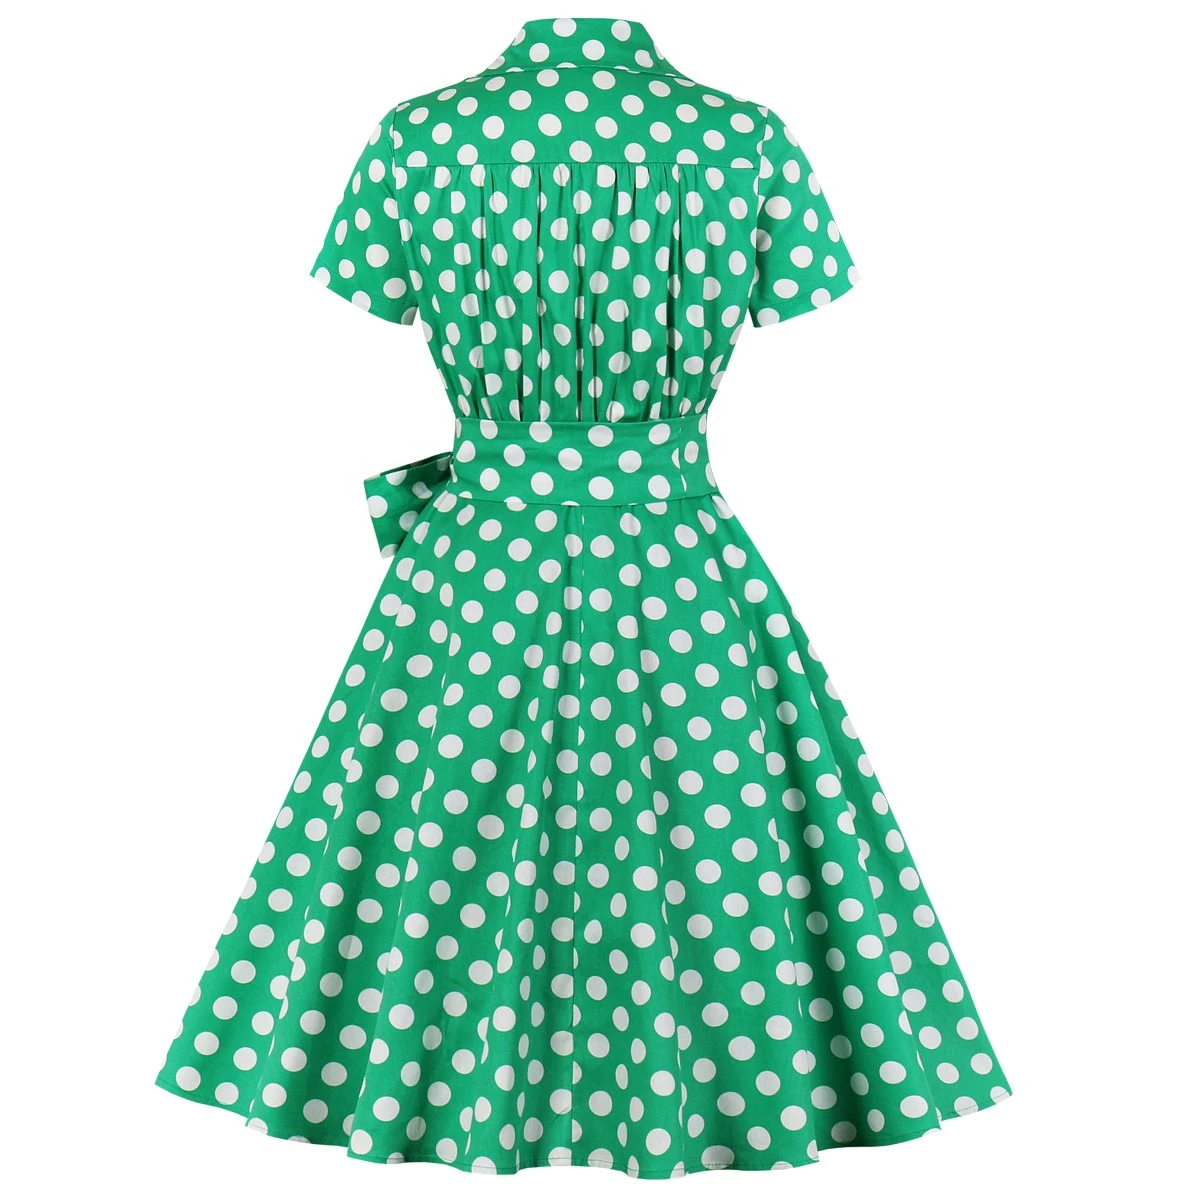 MXN-1207 Womens Shirt Collar Wrap Green Polka Dots Bow Waist Tie Vintage Dress